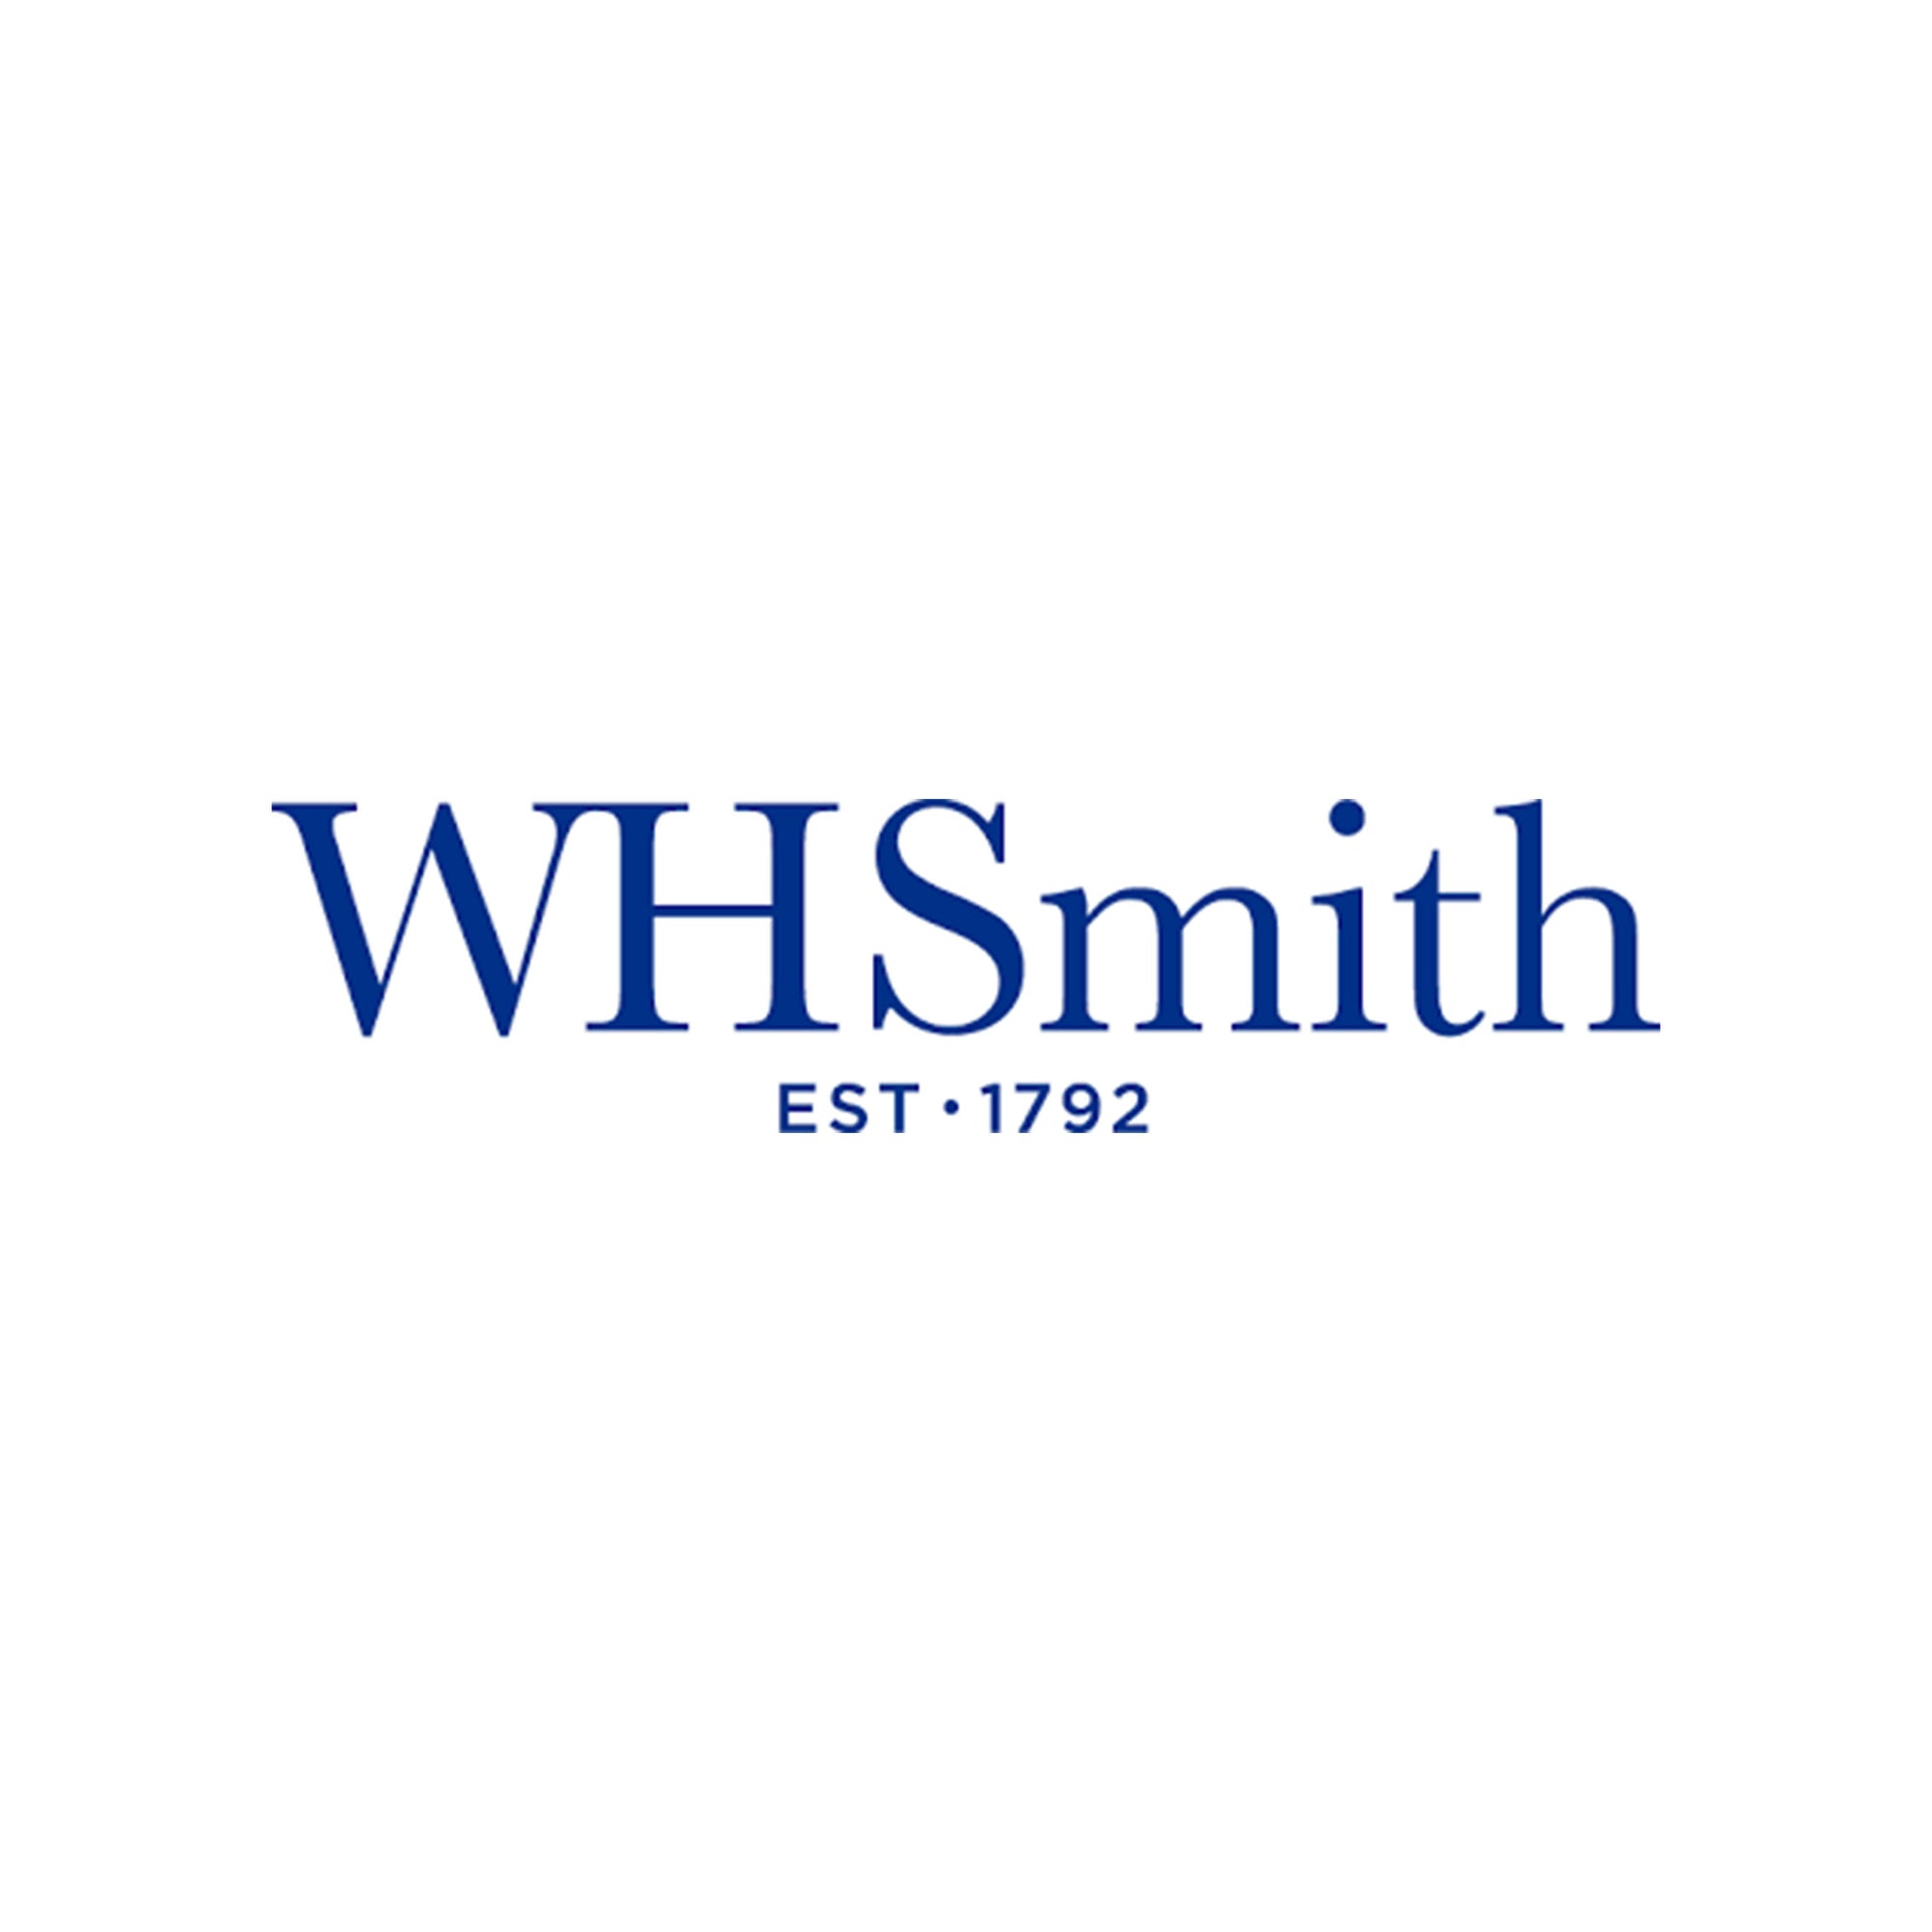 WHSmith EST 1792